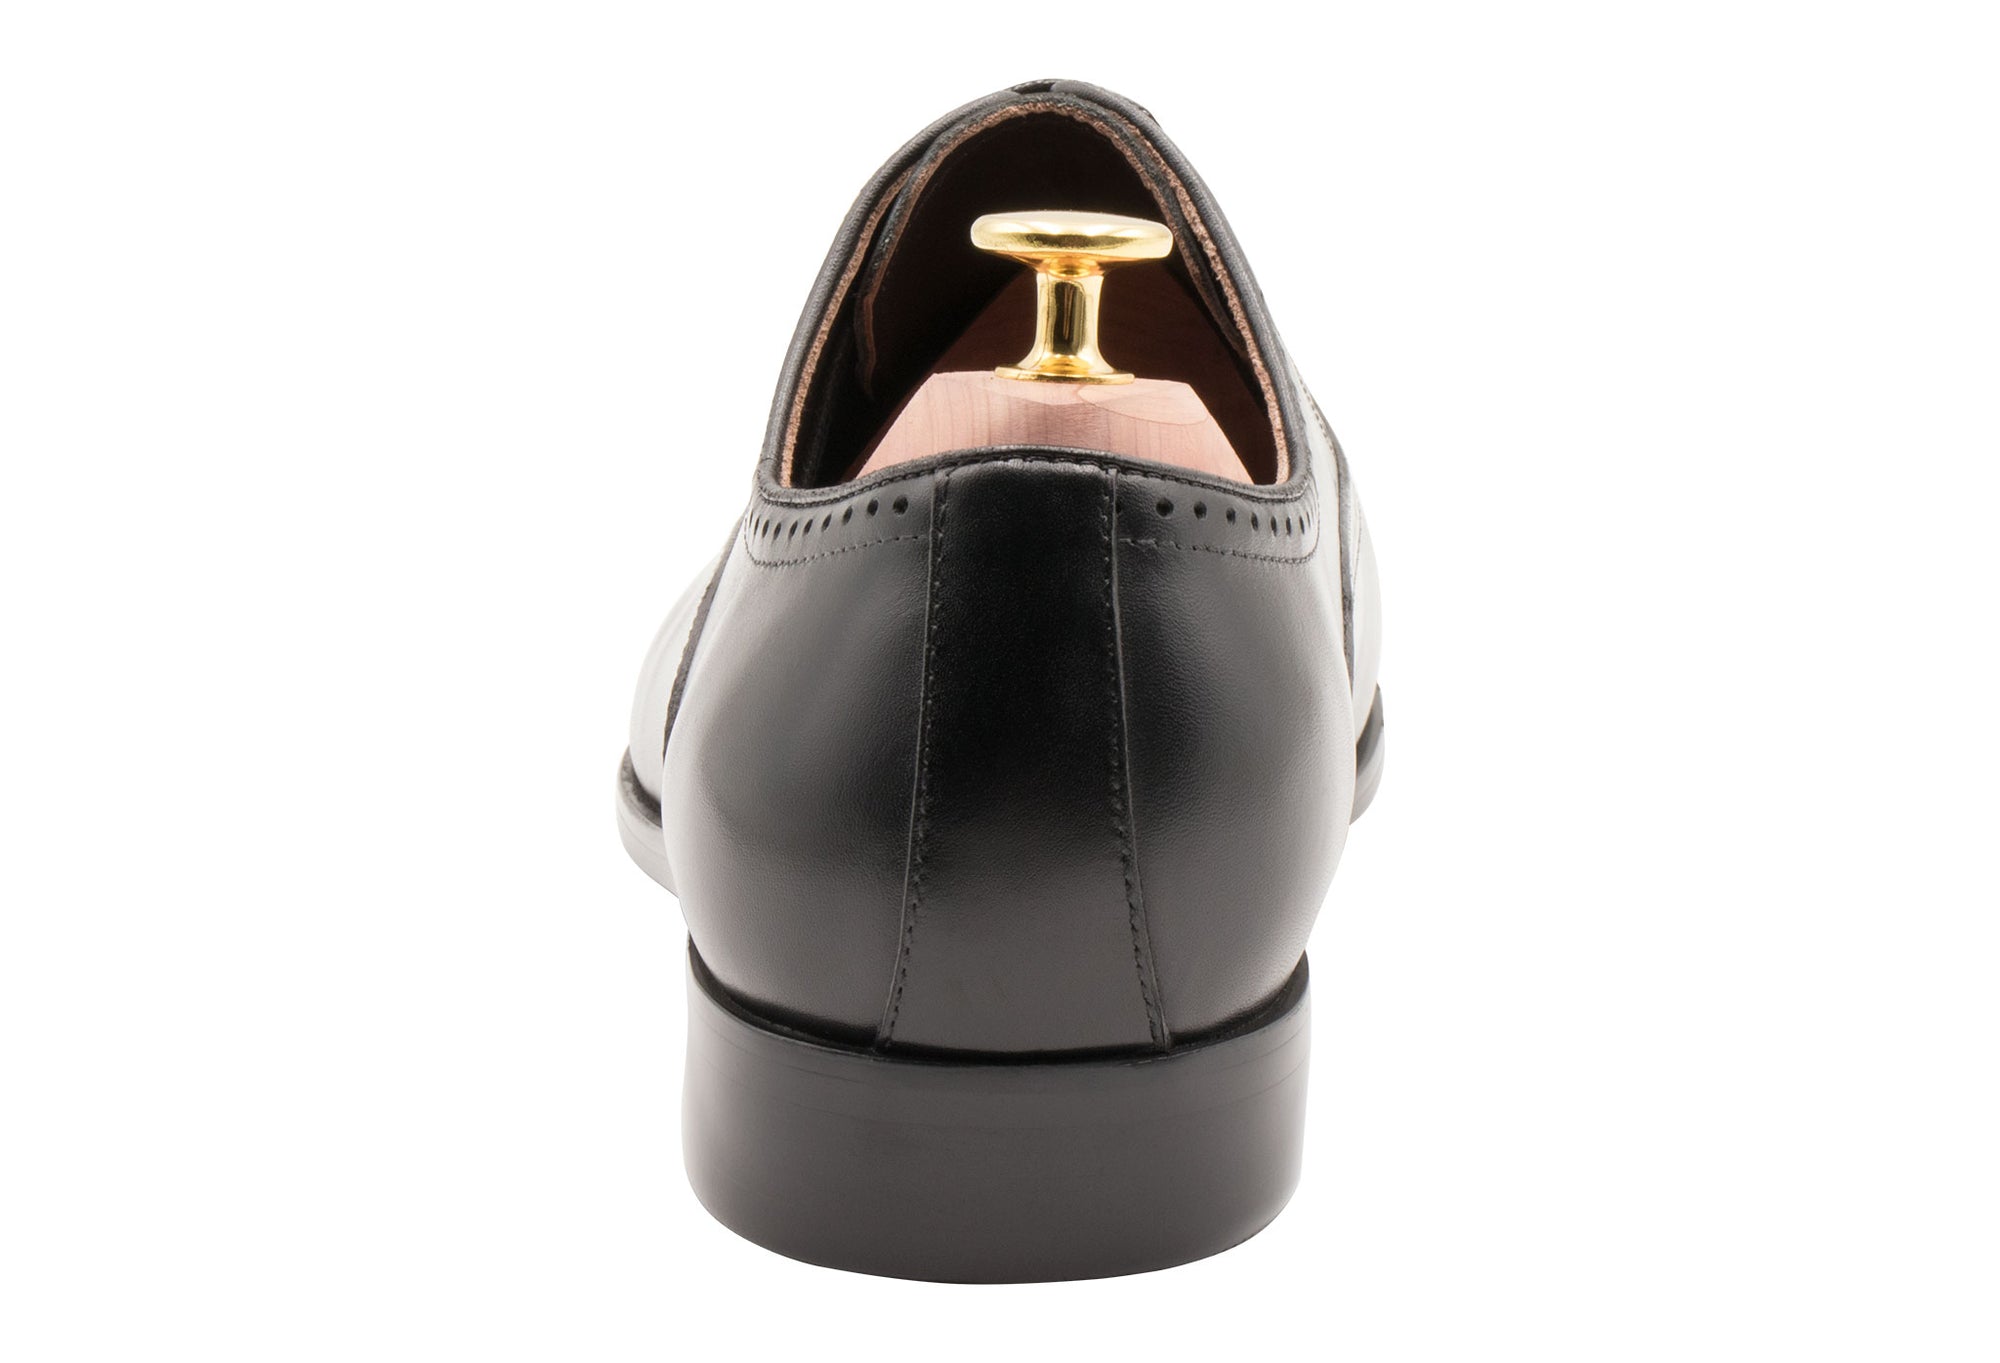 Mendoza Medallion Black Oxford Leather Shoes